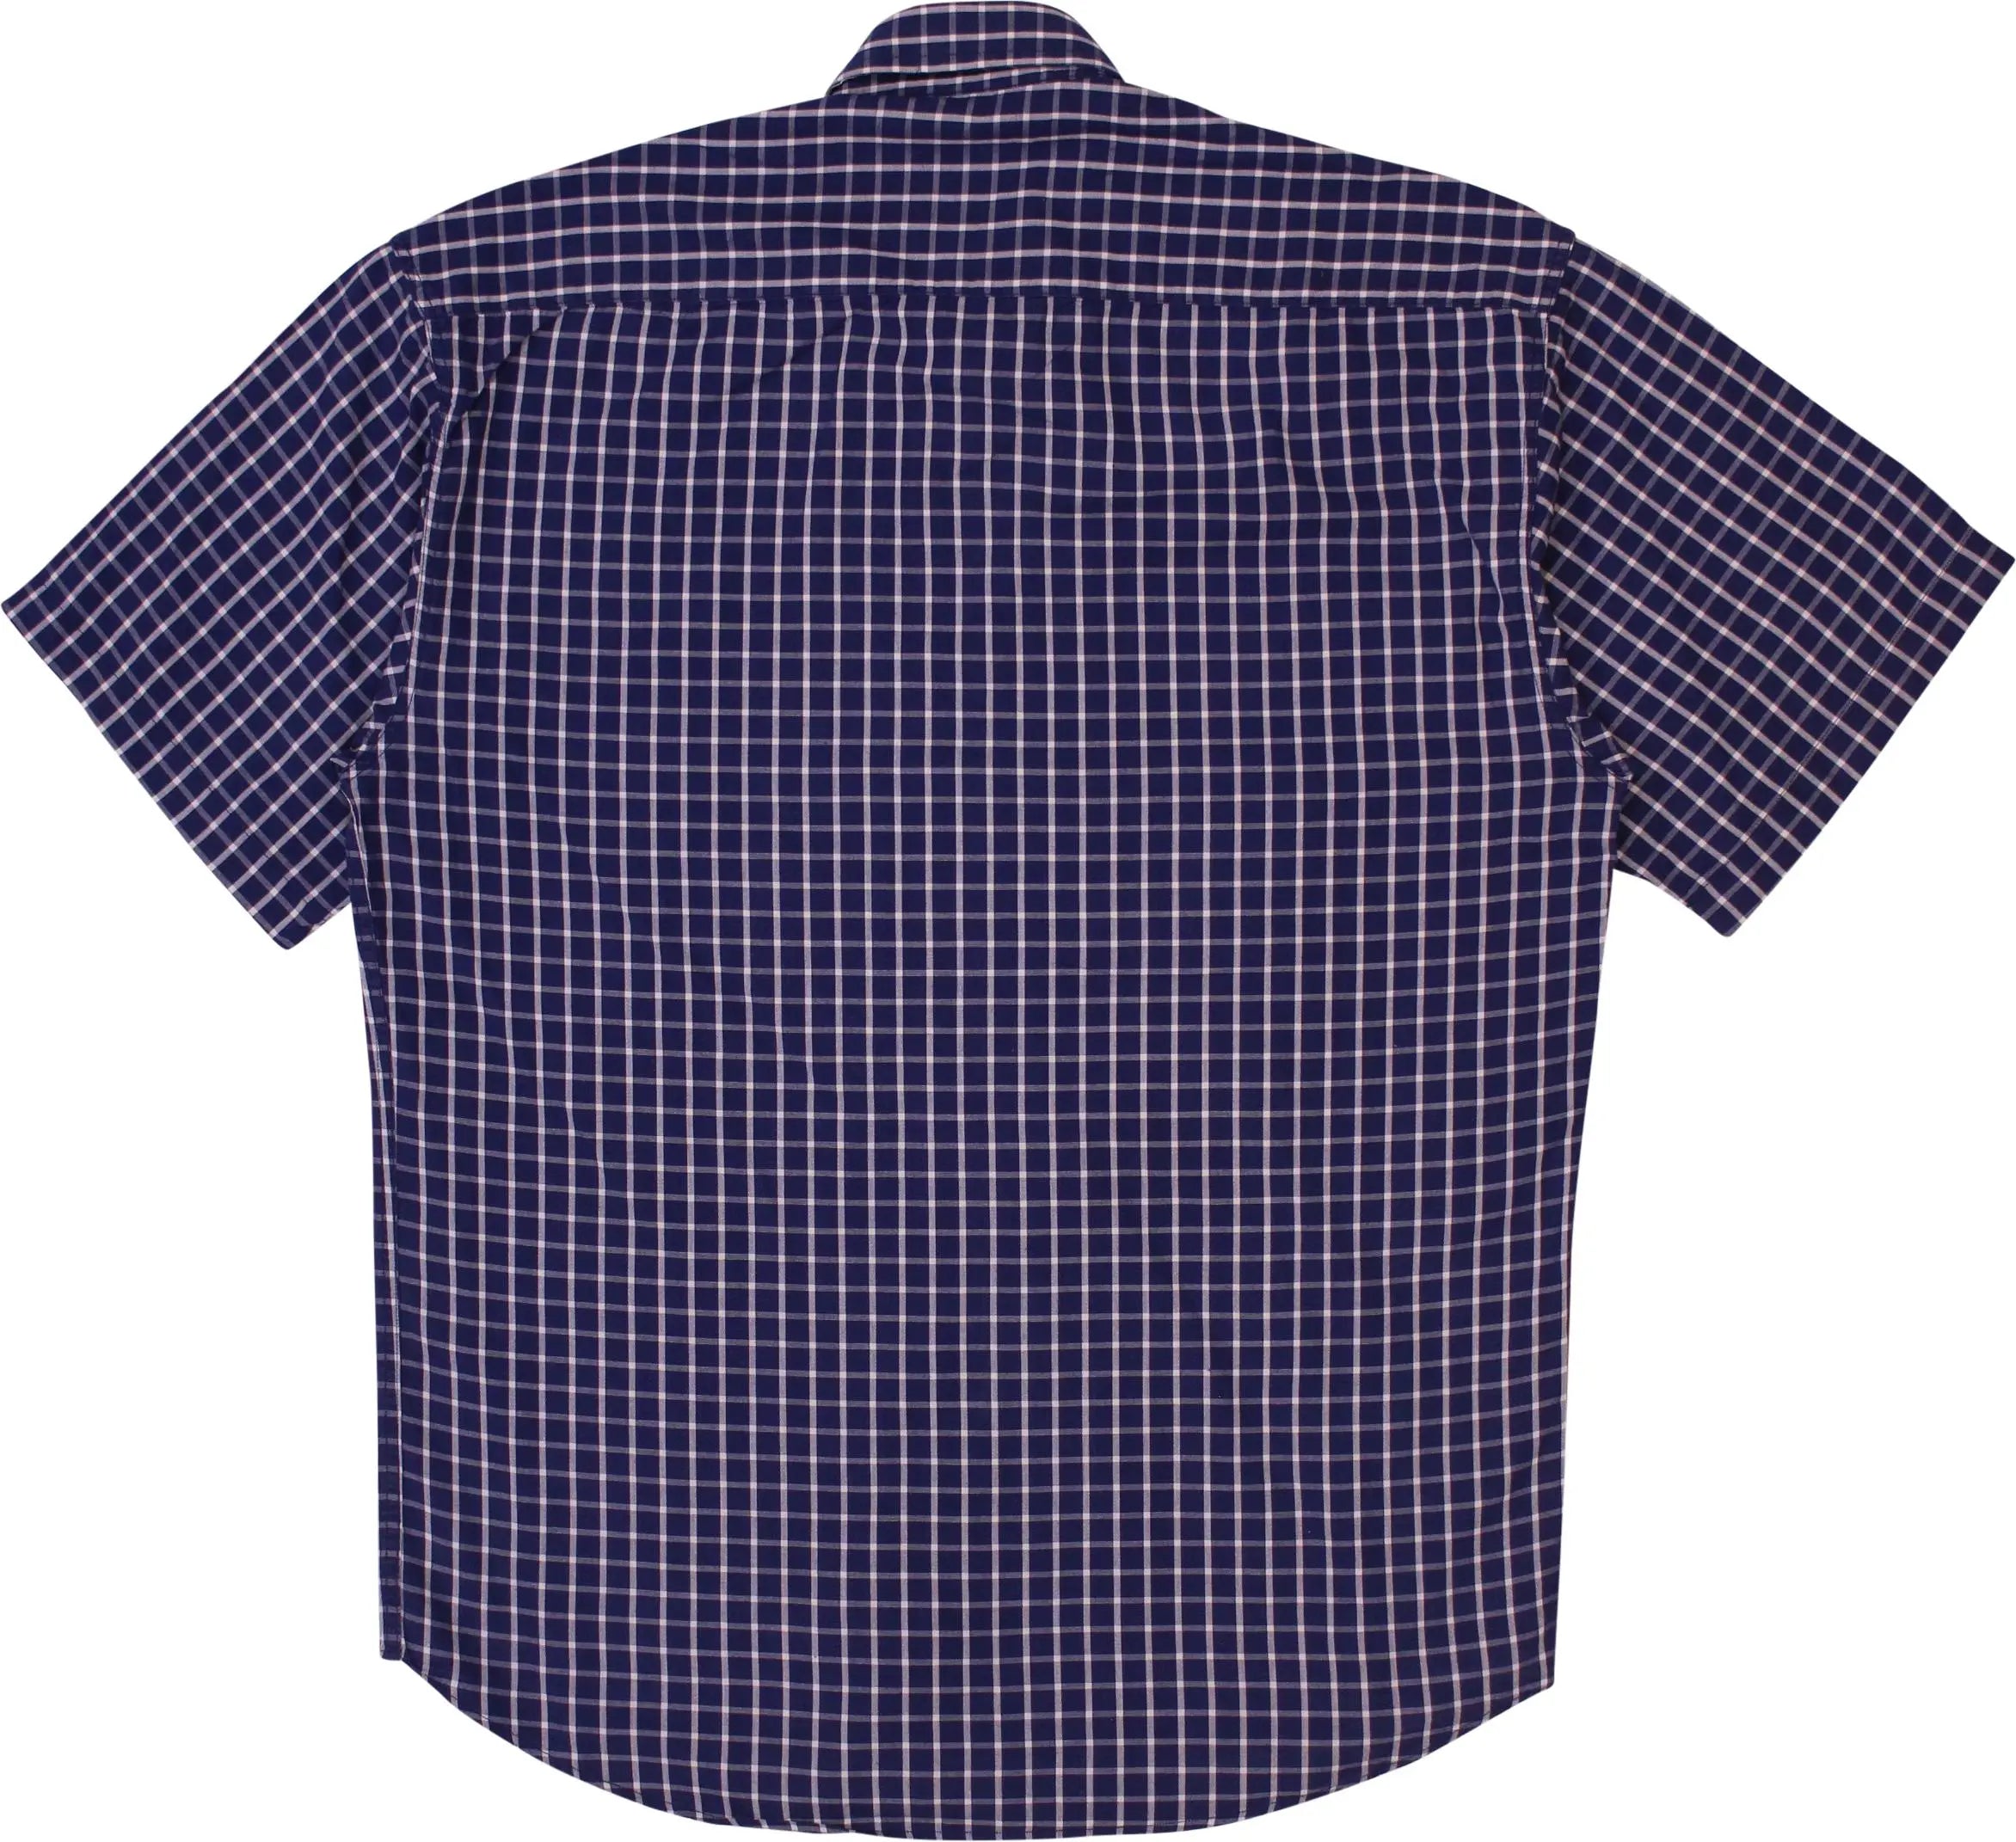 Fila - Fila Short Sleeve Shirt- ThriftTale.com - Vintage and second handclothing